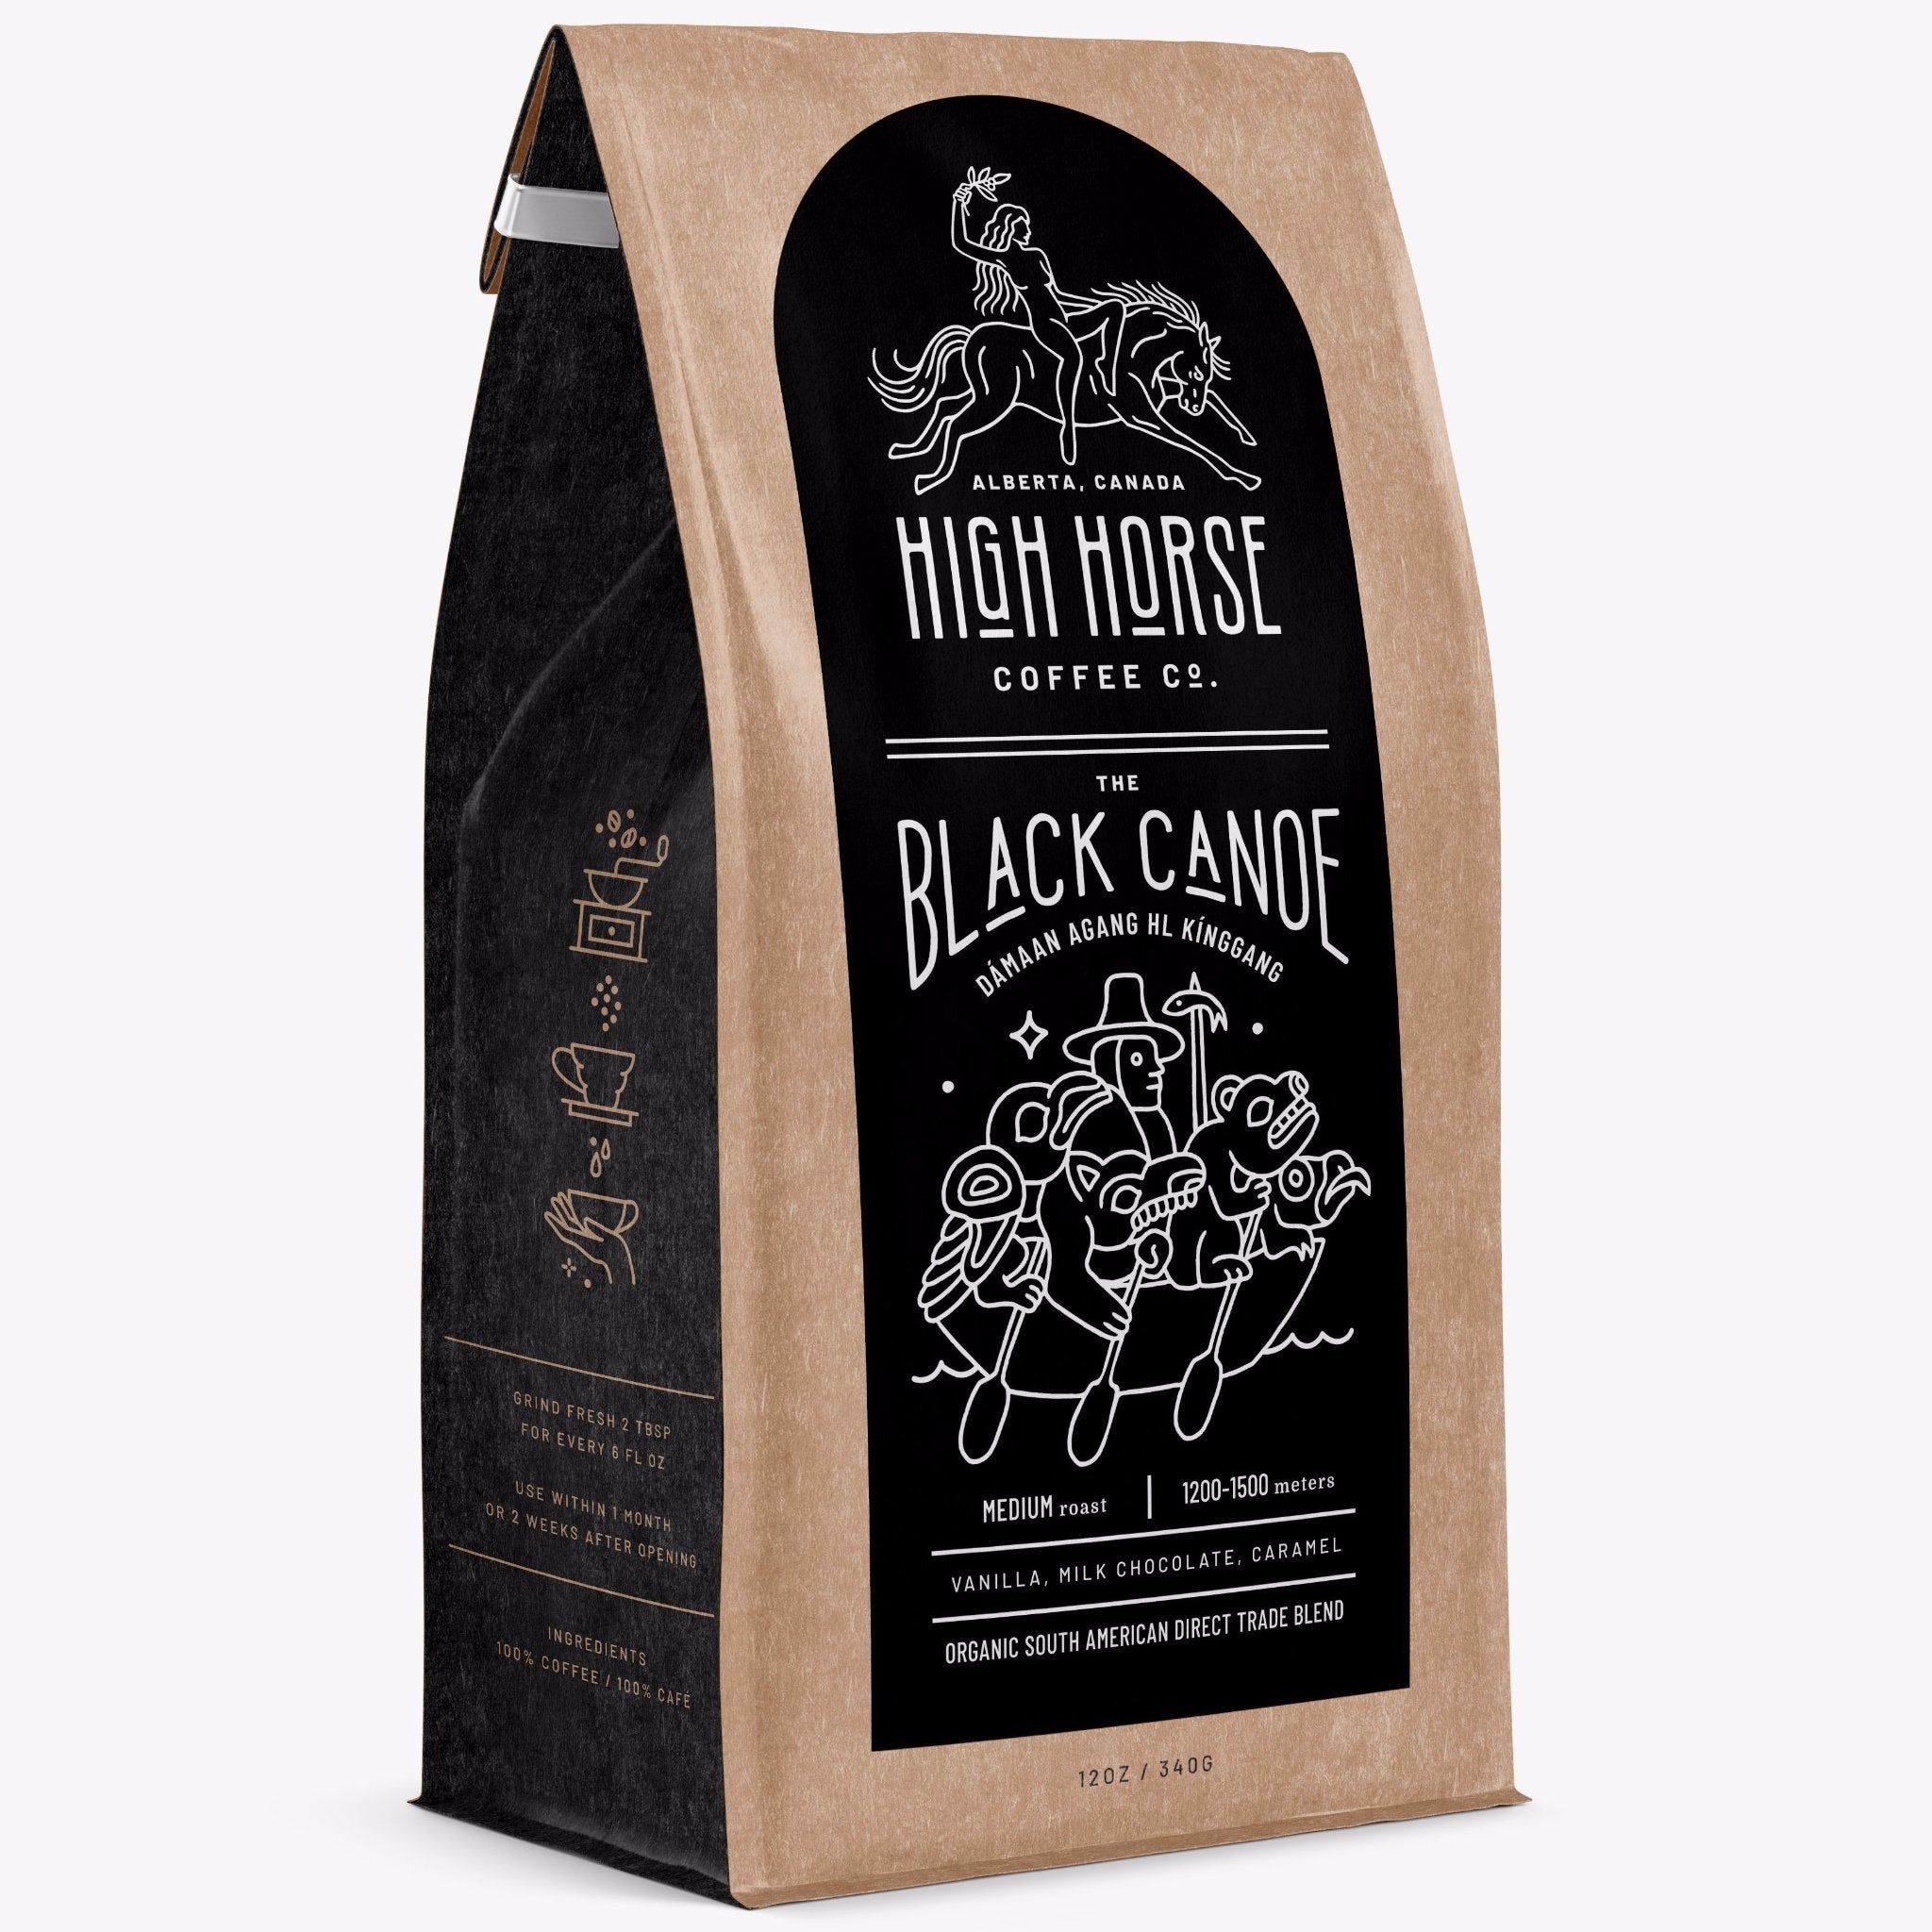 The Black Canoe - High Horse Coffee Company